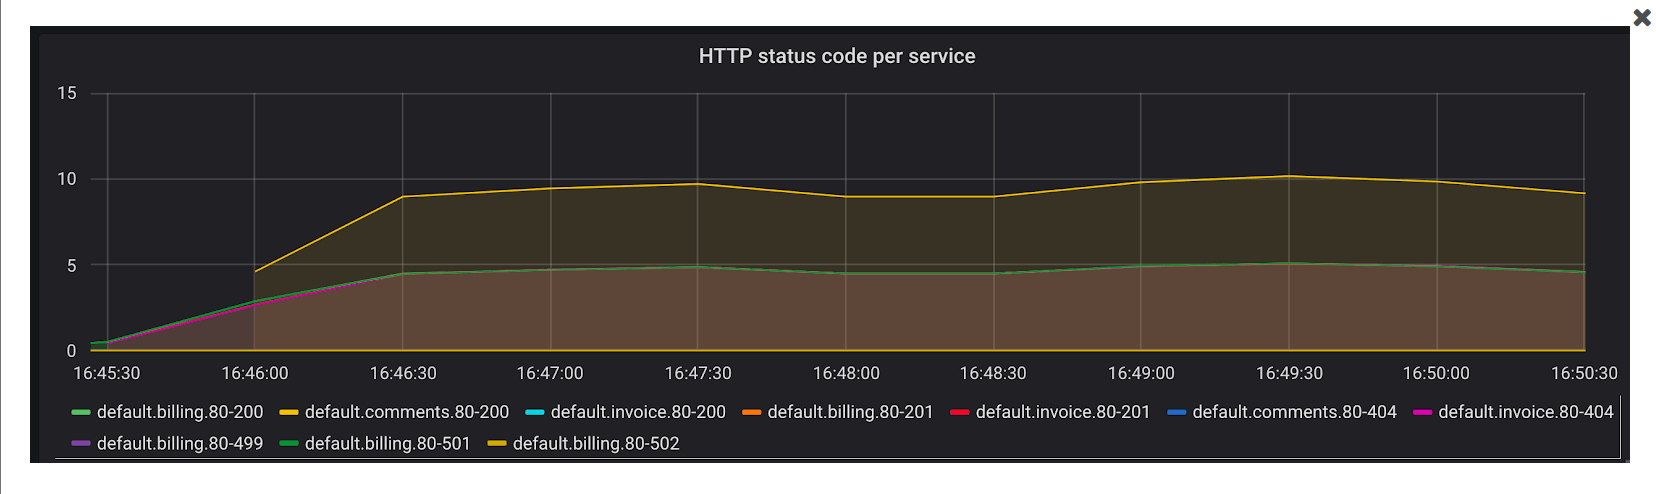 HTTP Status